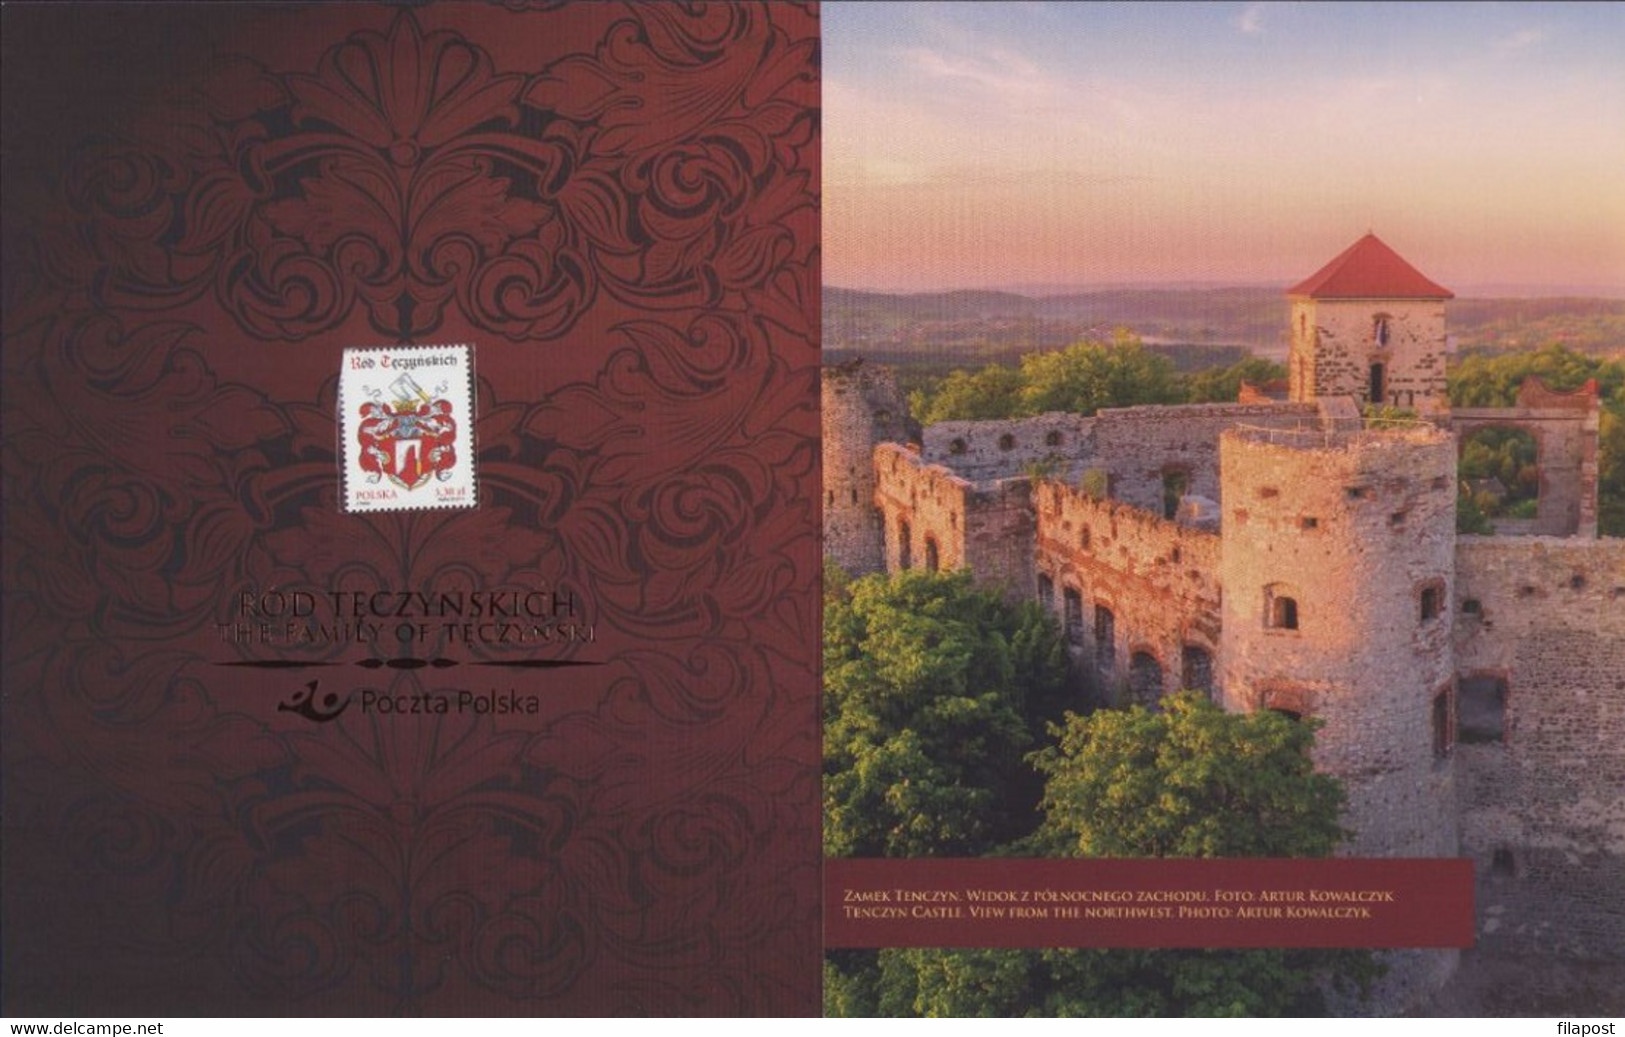 POLAND 2019 Booklet / The Family Of Teczynski, Kingdom Of Poland, Piast Dynasty, Jagiellon Dynasty / With Stamp MNH** - Cuadernillos